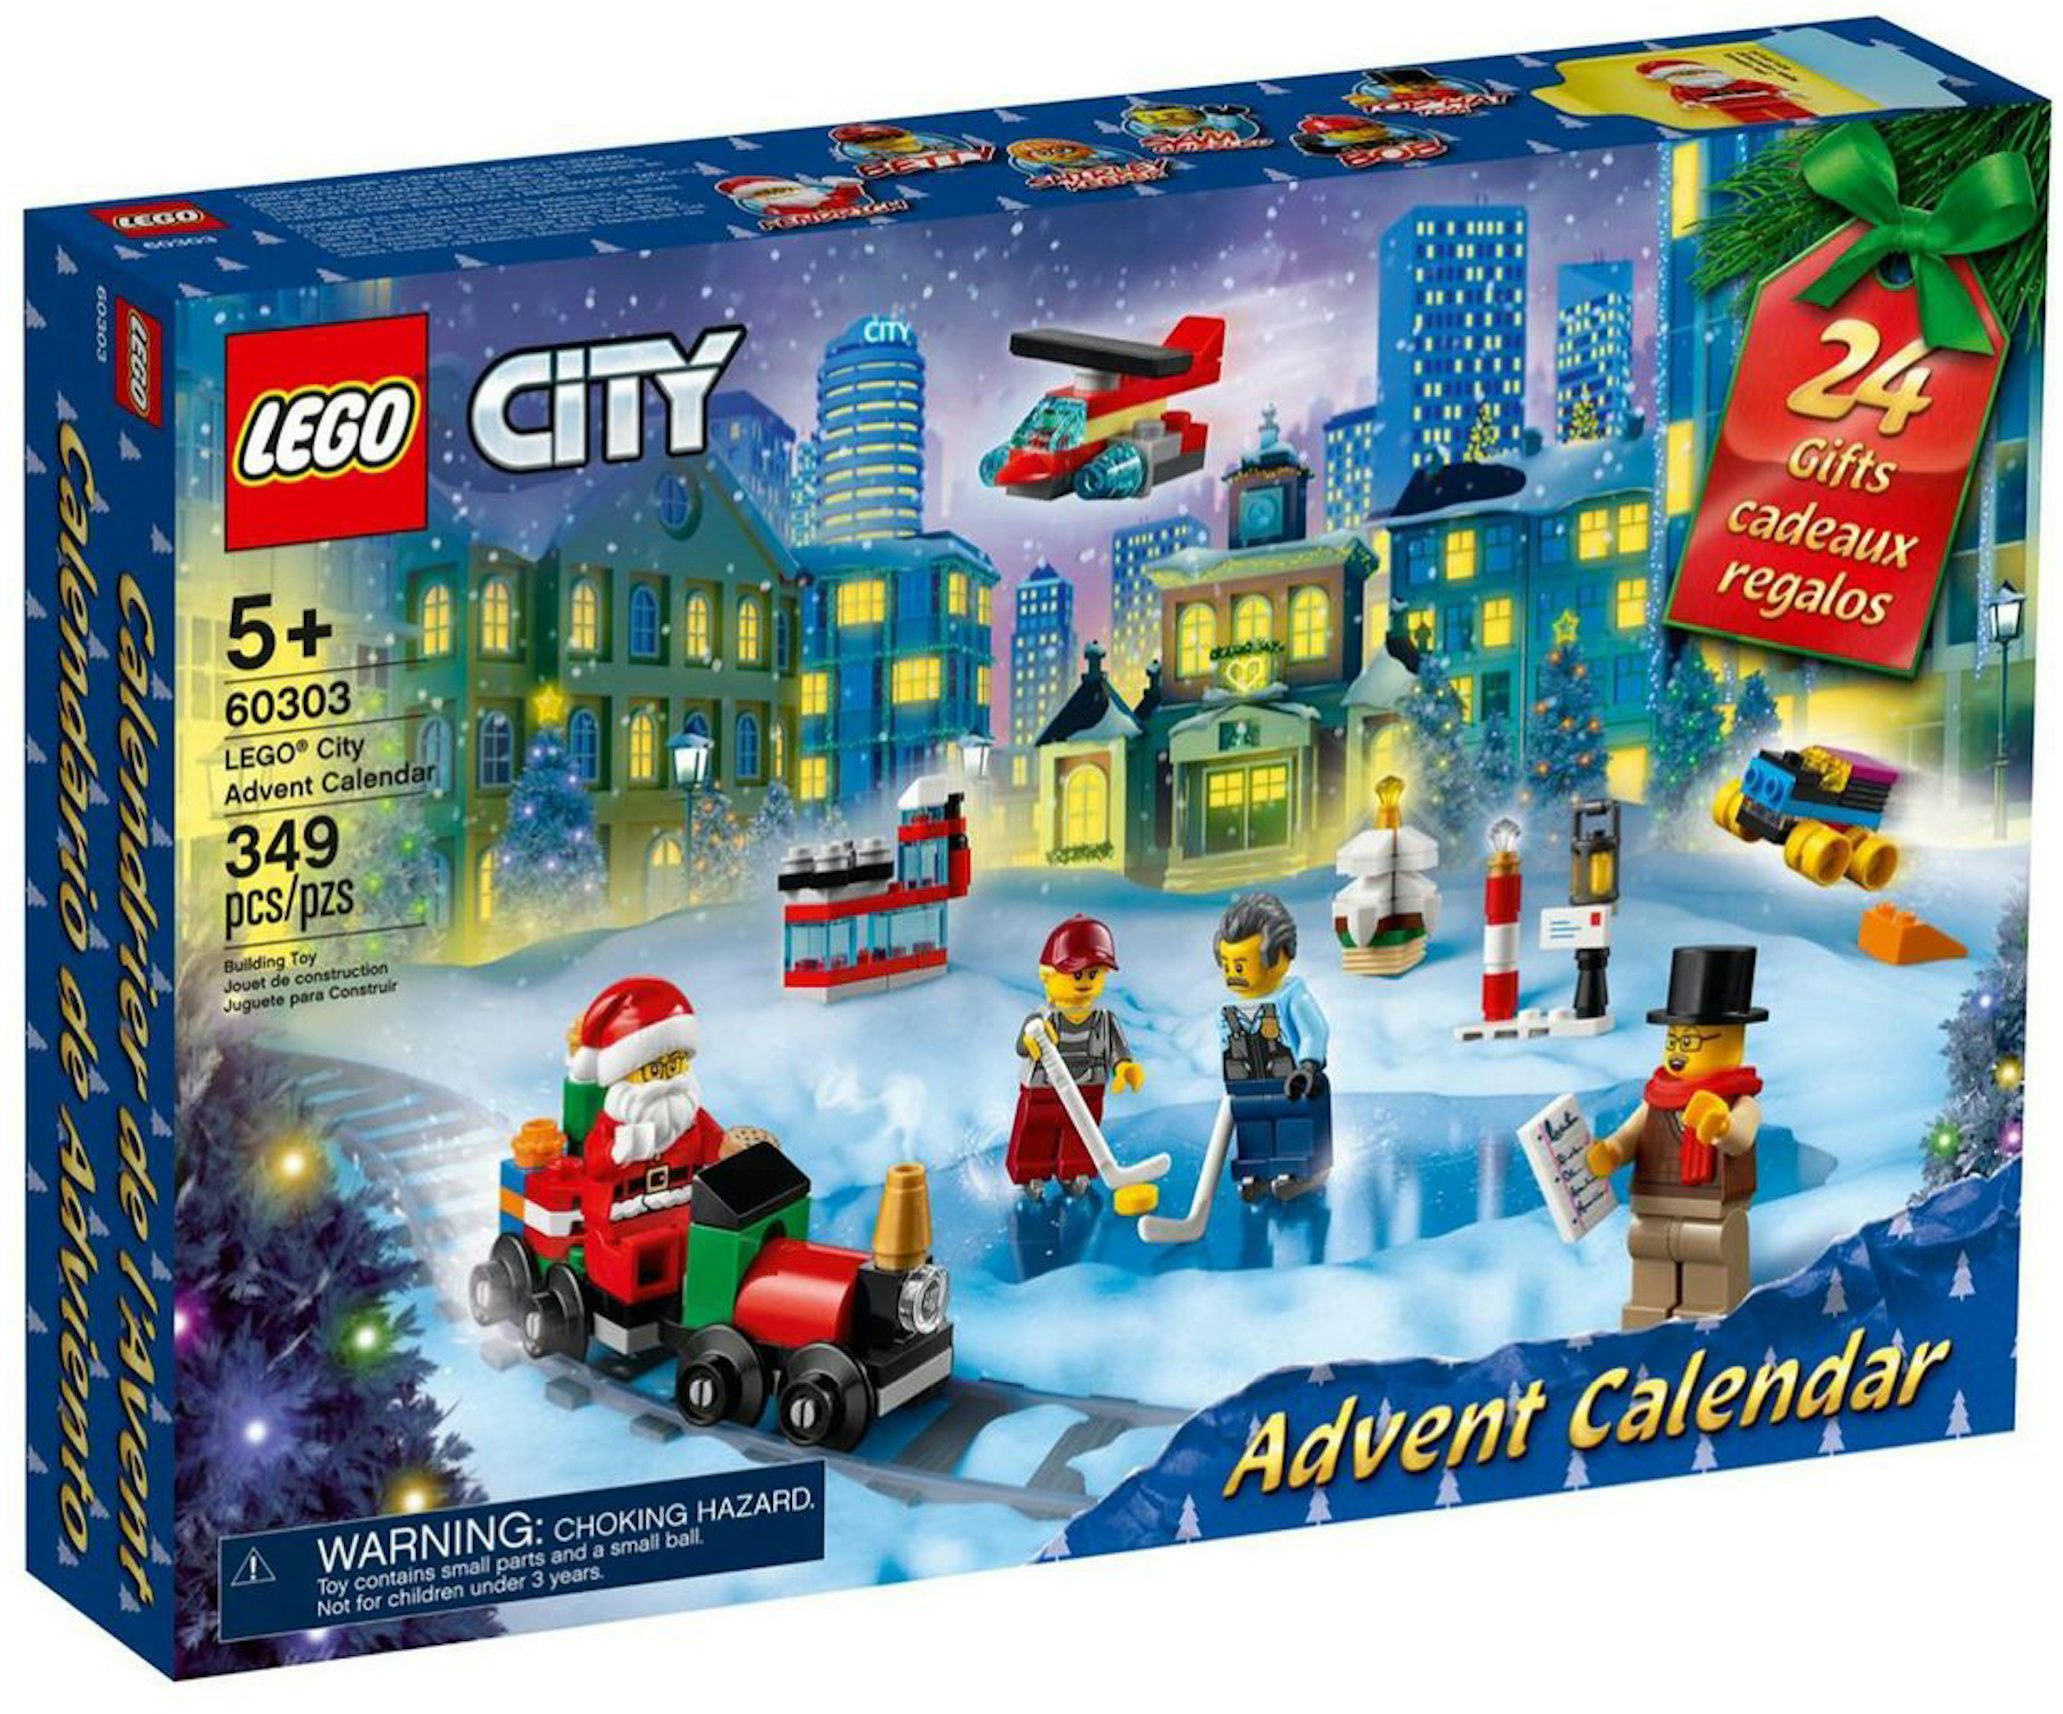 LEGO City Advent Calendar Set 60303 - FW21 - US